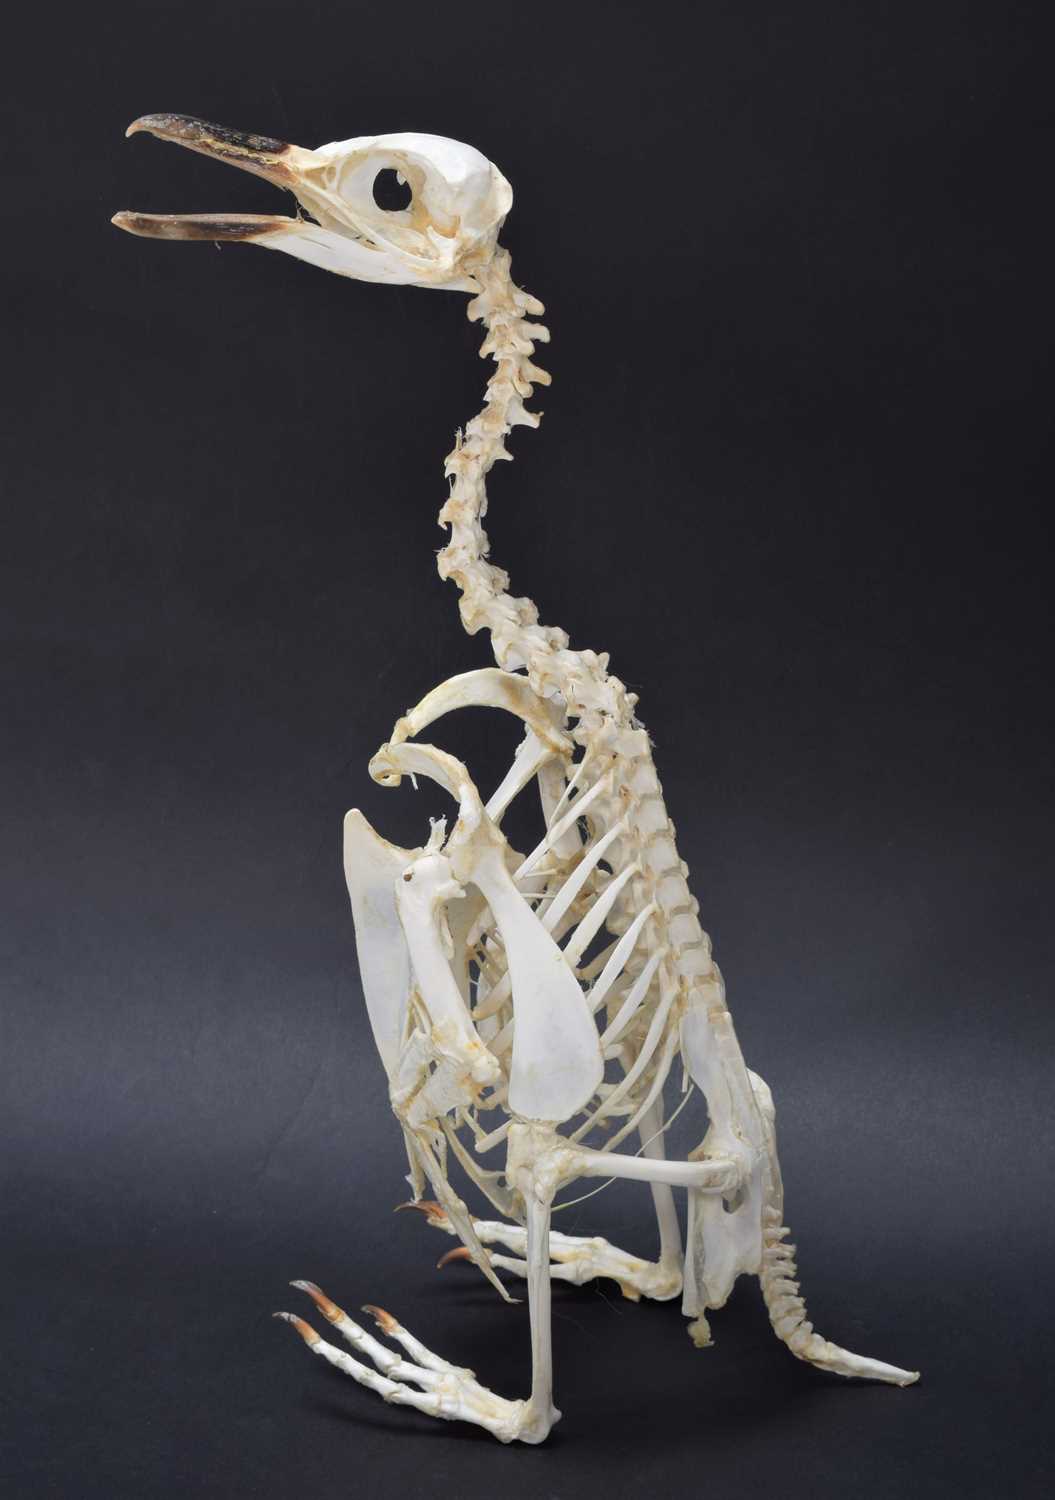 Lot 44 - Skeletons/Anatomy: A Megellanic Penguin